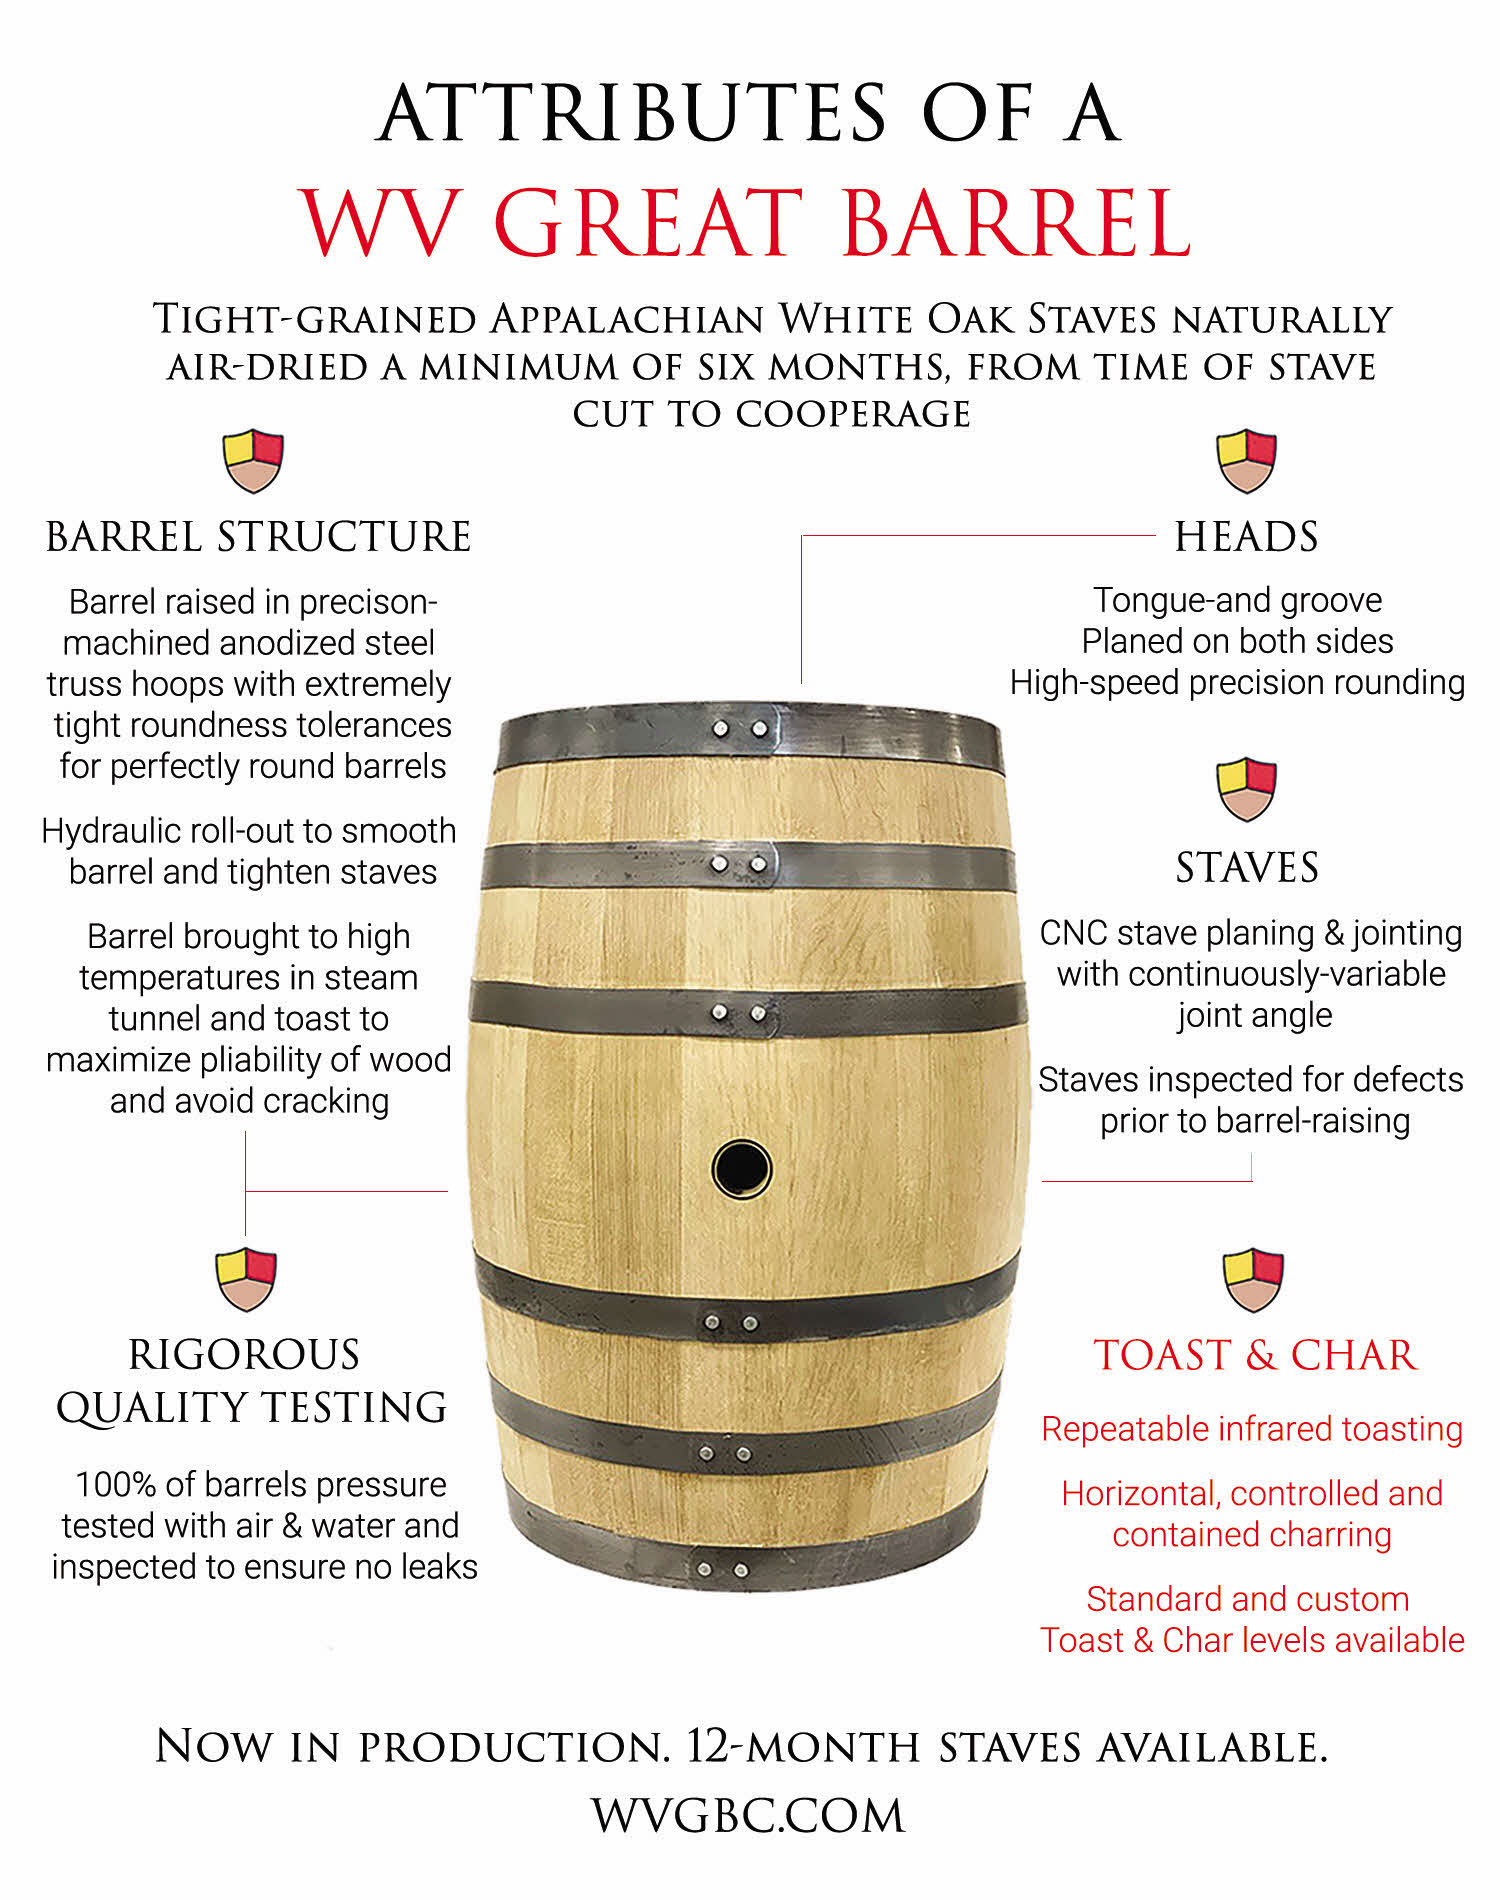 West Virginia Great Barrel Company - Attributes of a WV Great Barrel